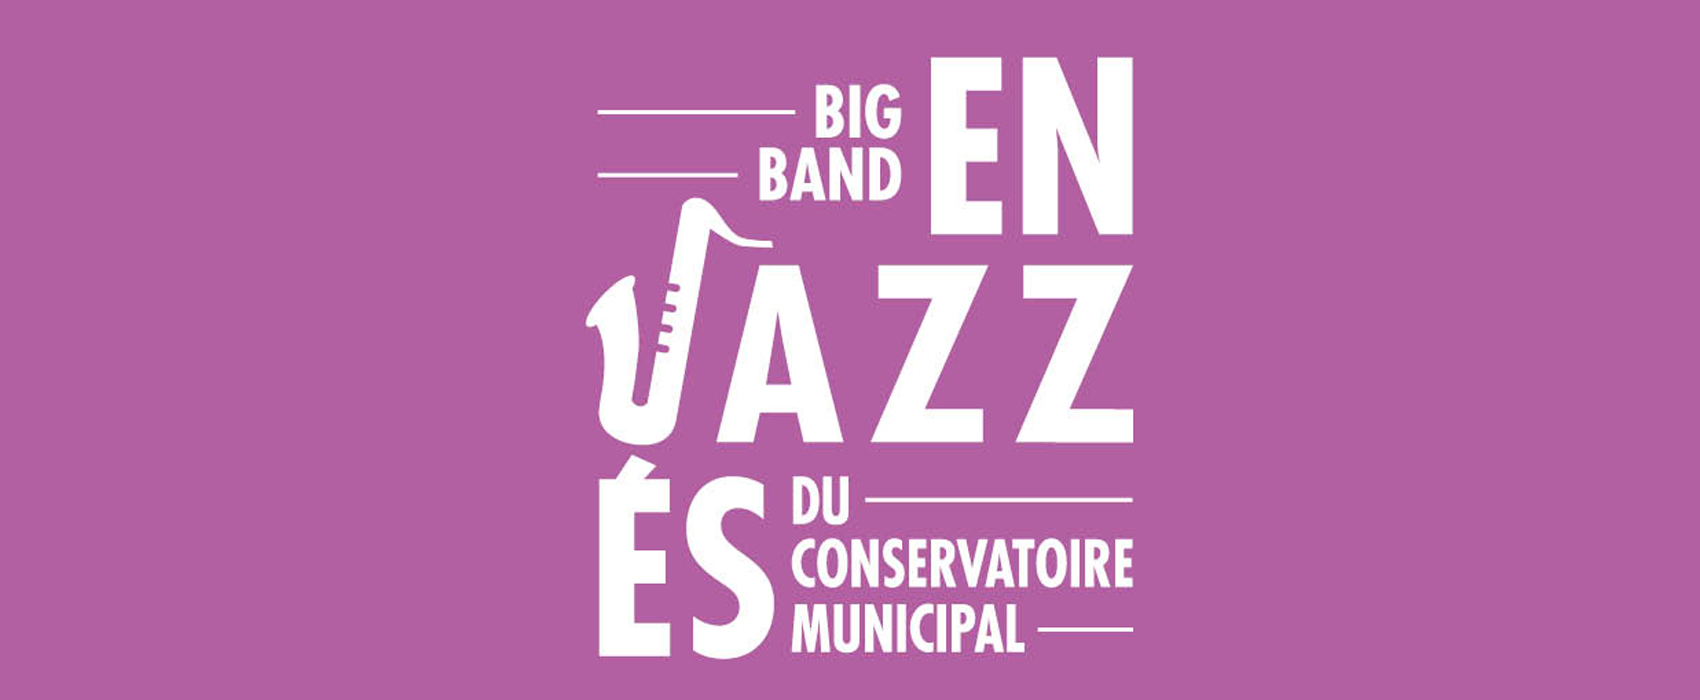 big band jazz